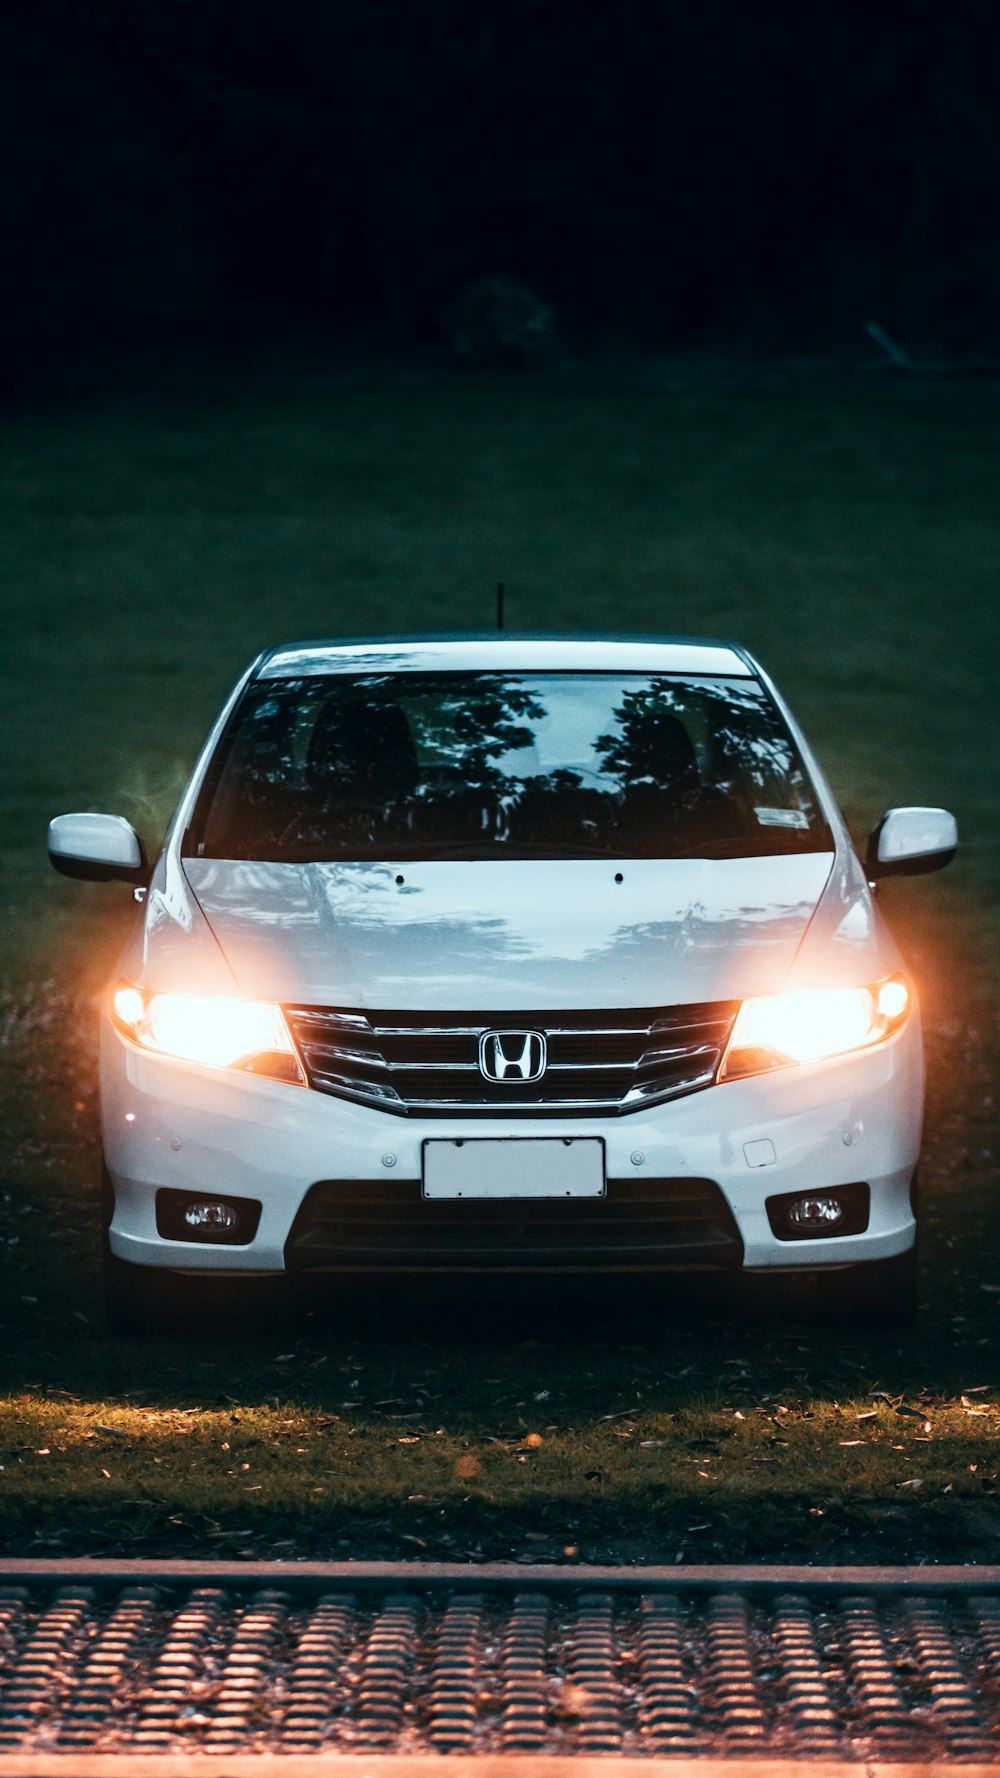 white Honda vehicle during daytime